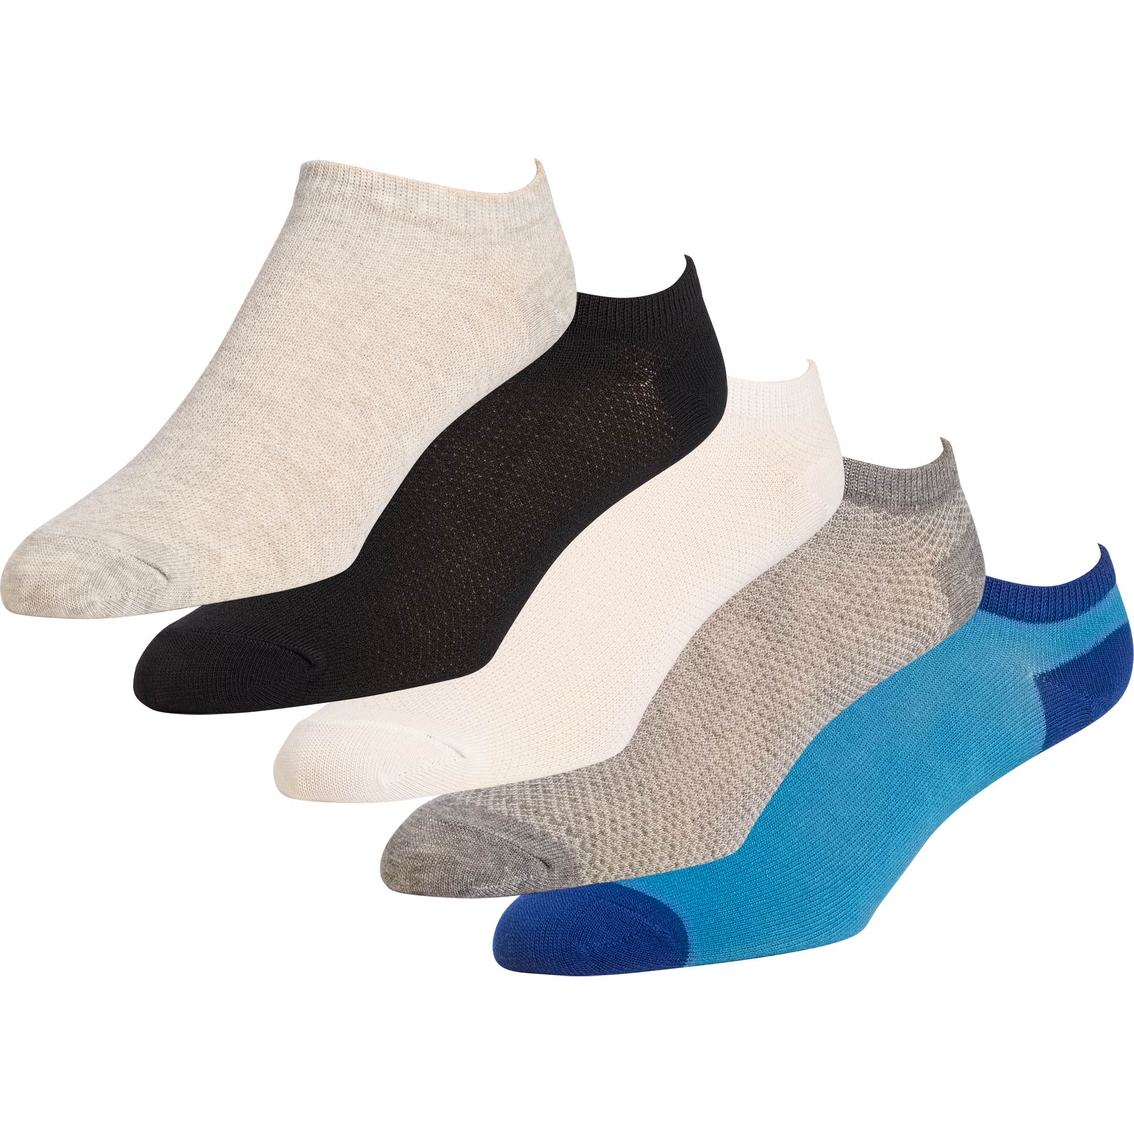 K. Bell Pique No Show Socks 6 Pk. | Socks & Tights | Clothing ...